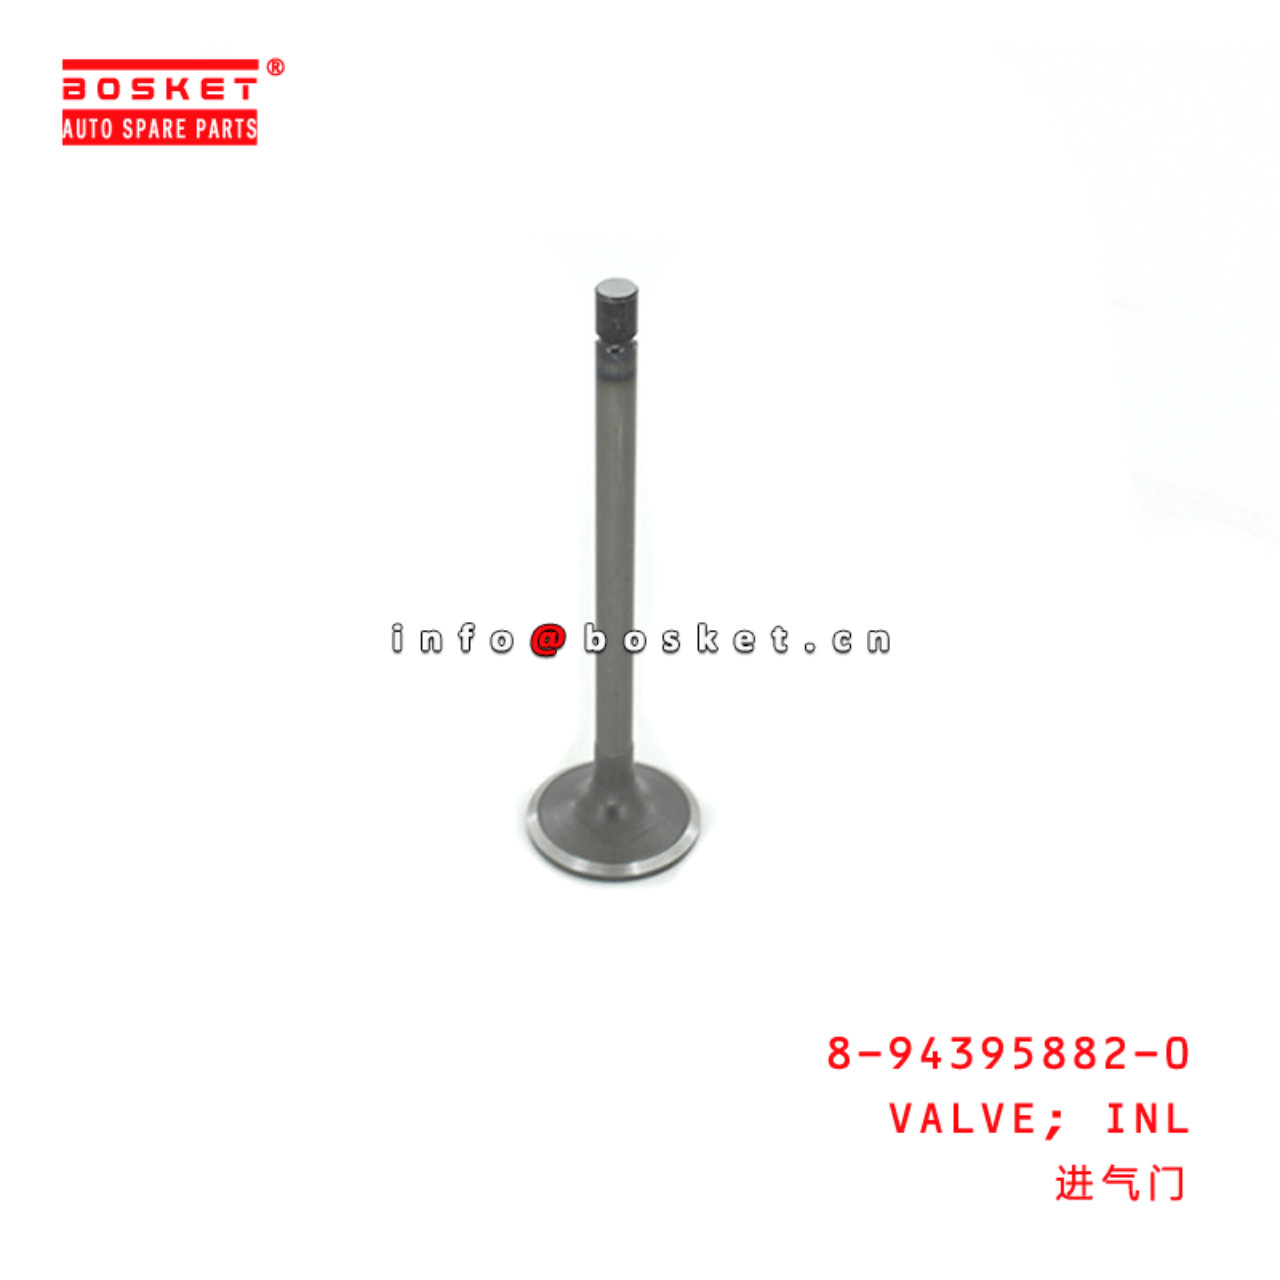  8-94395882-0 Inlet Valve 8943958820 Suitable for ISUZU FVZ34 6HK1